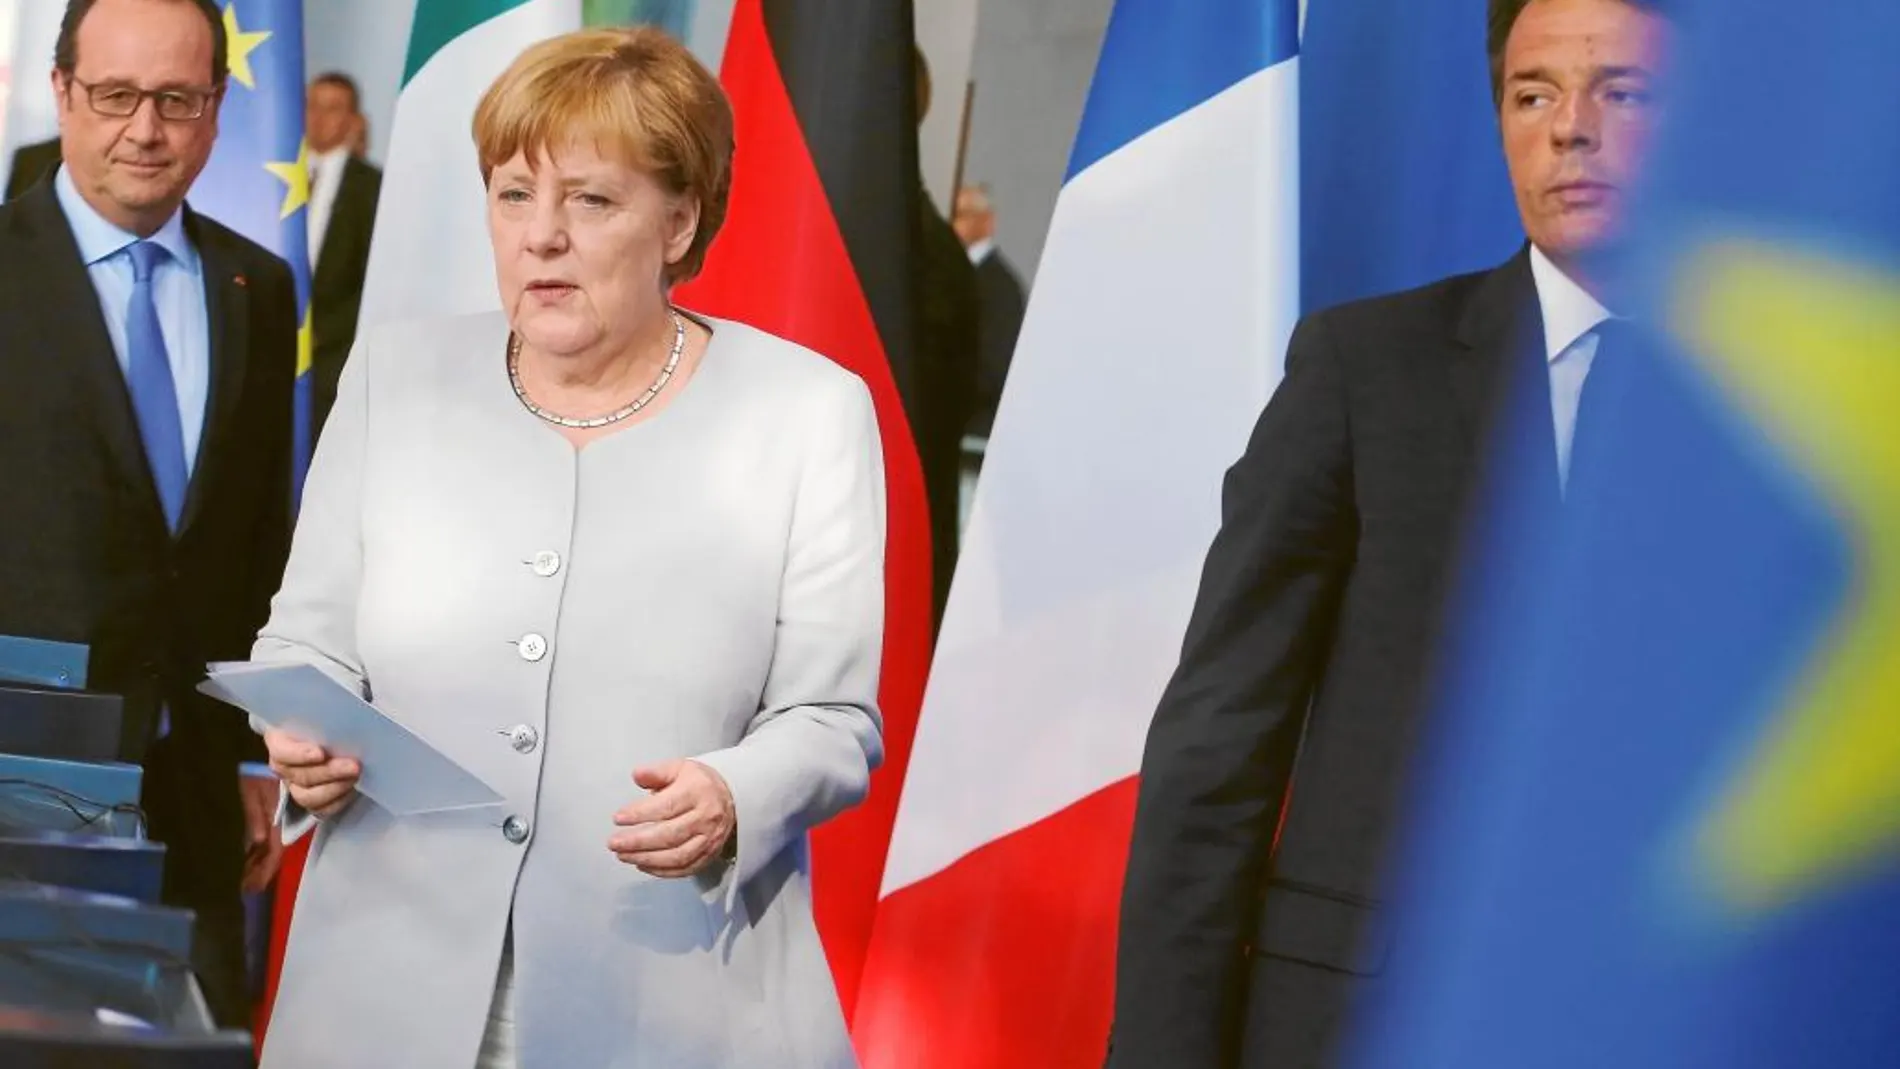 La canciller alemana, Angela Merkel, junto al francés François Hollande (izqda.) y el italiano Matteo Renzi (dcha.), ayer en Berlín